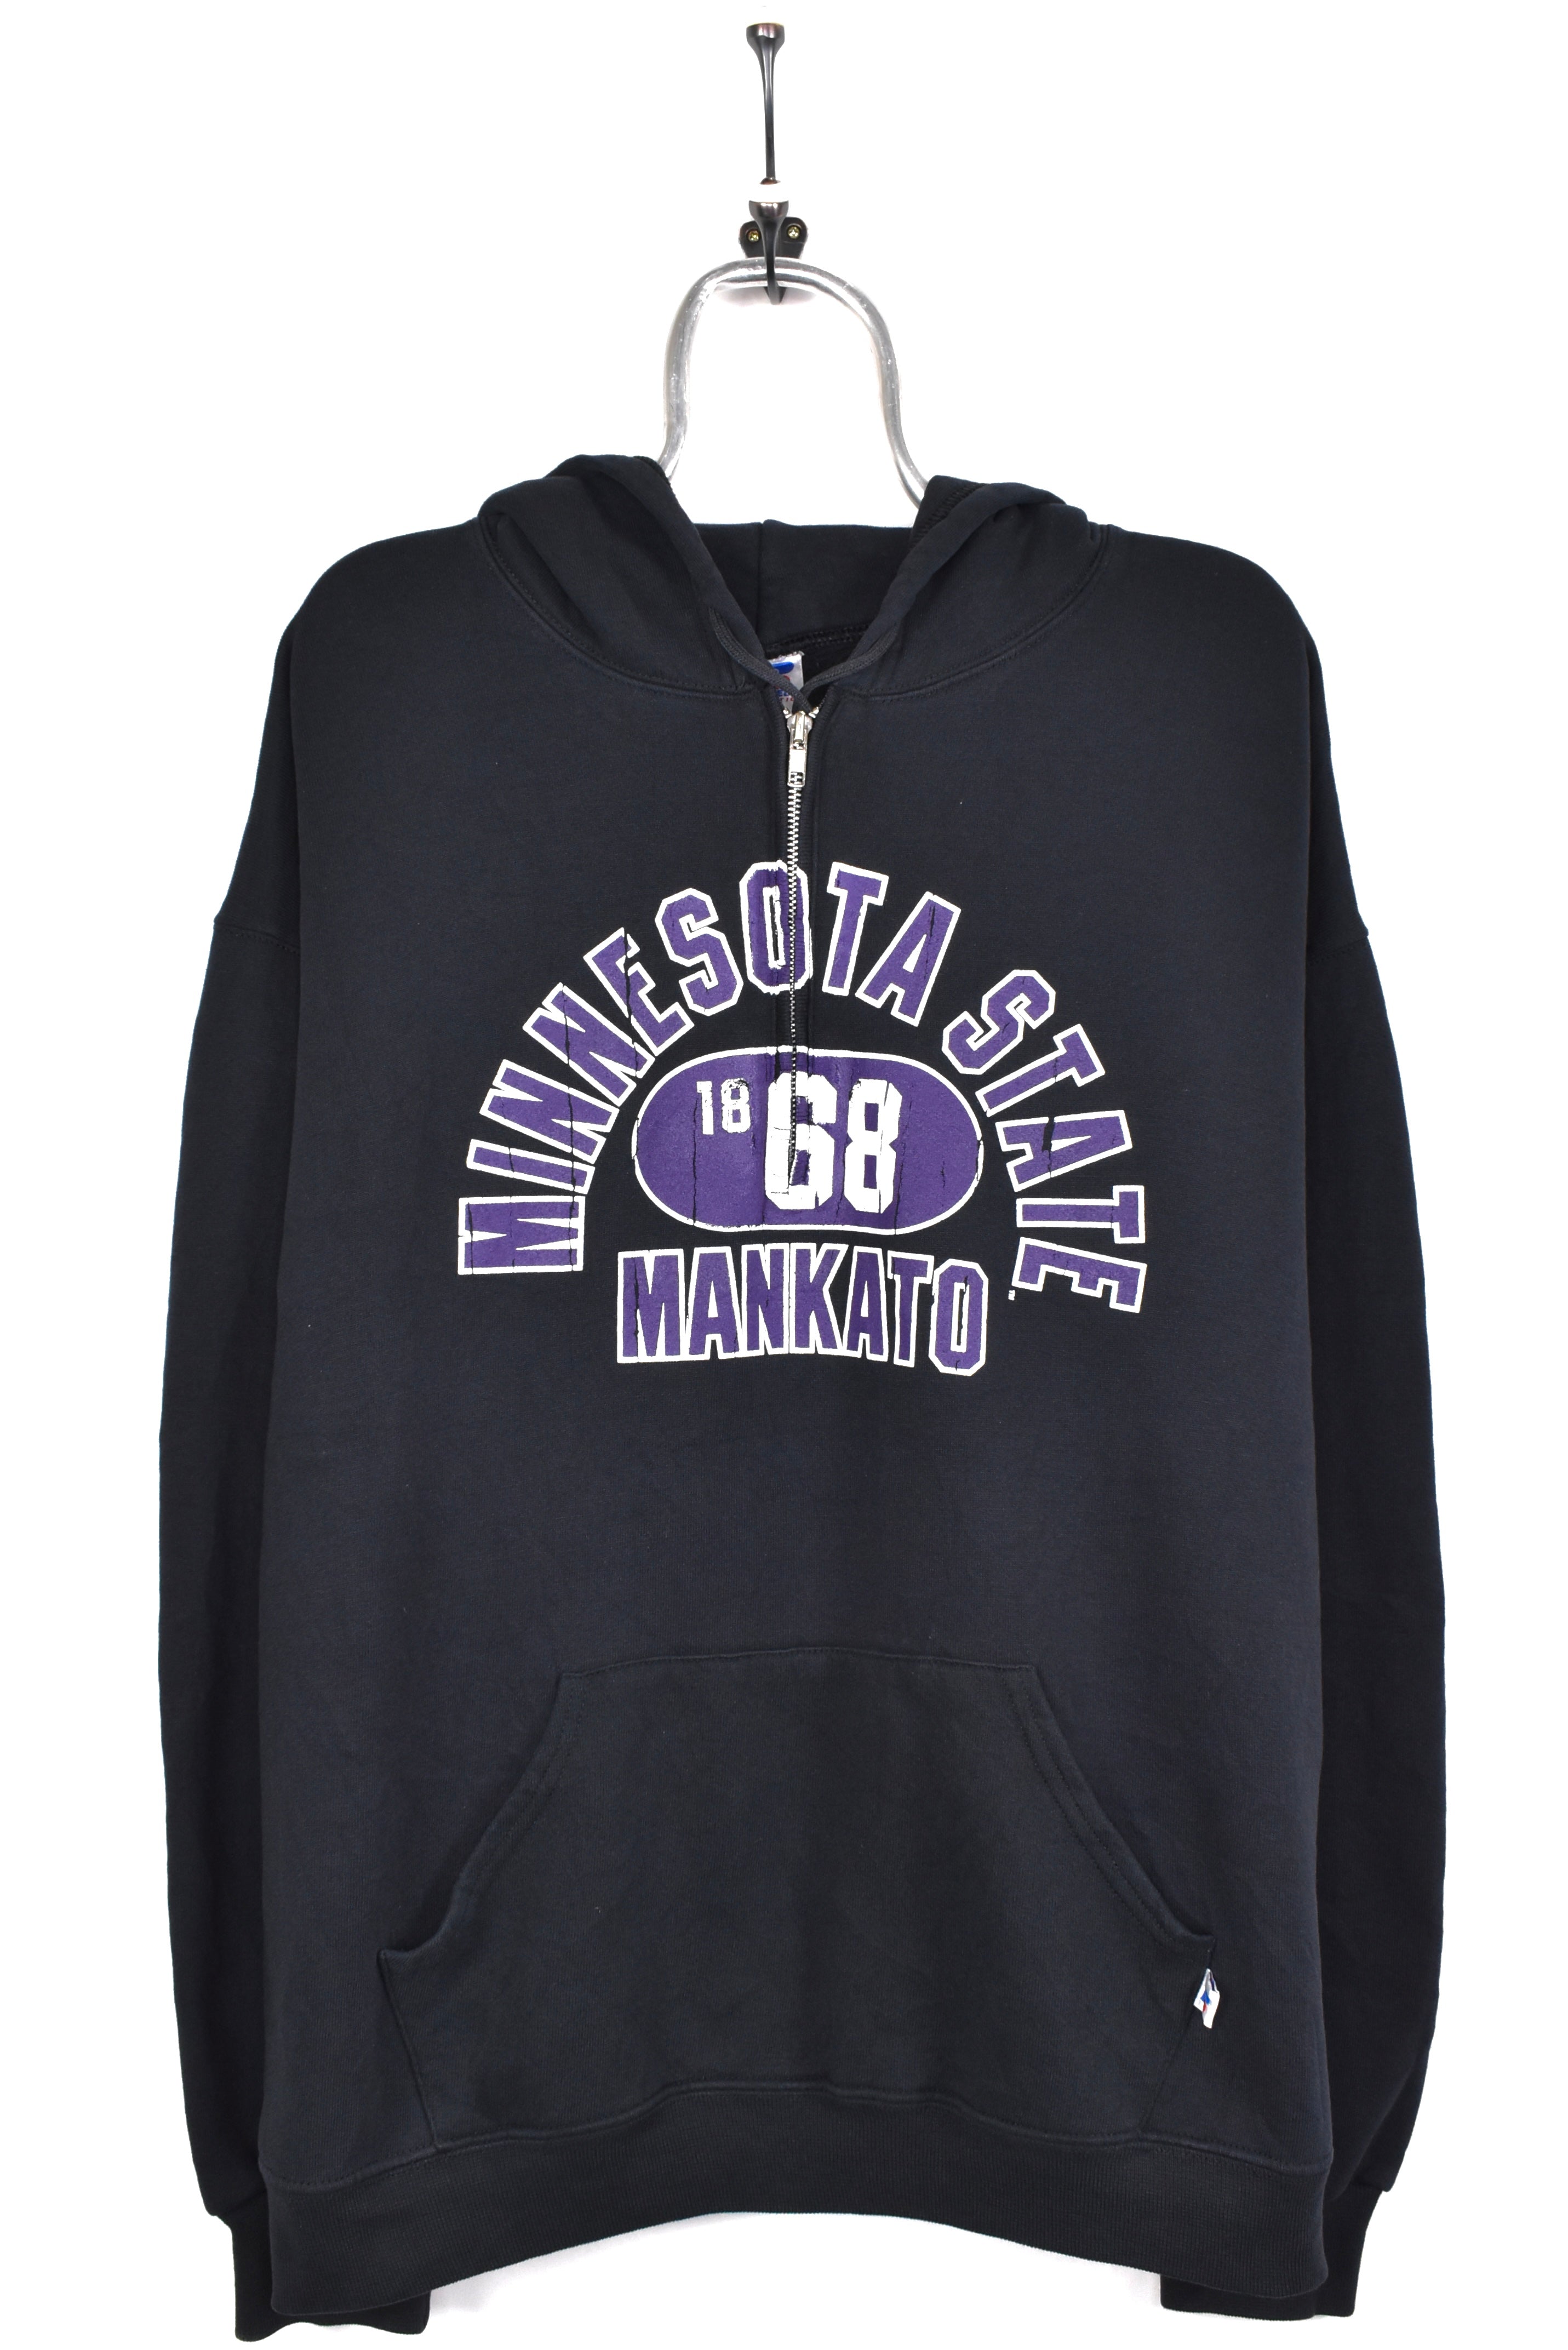 Vintage Minnesota State University hoodie, black Mankato graphic sweatshirt - AU XL COLLEGE